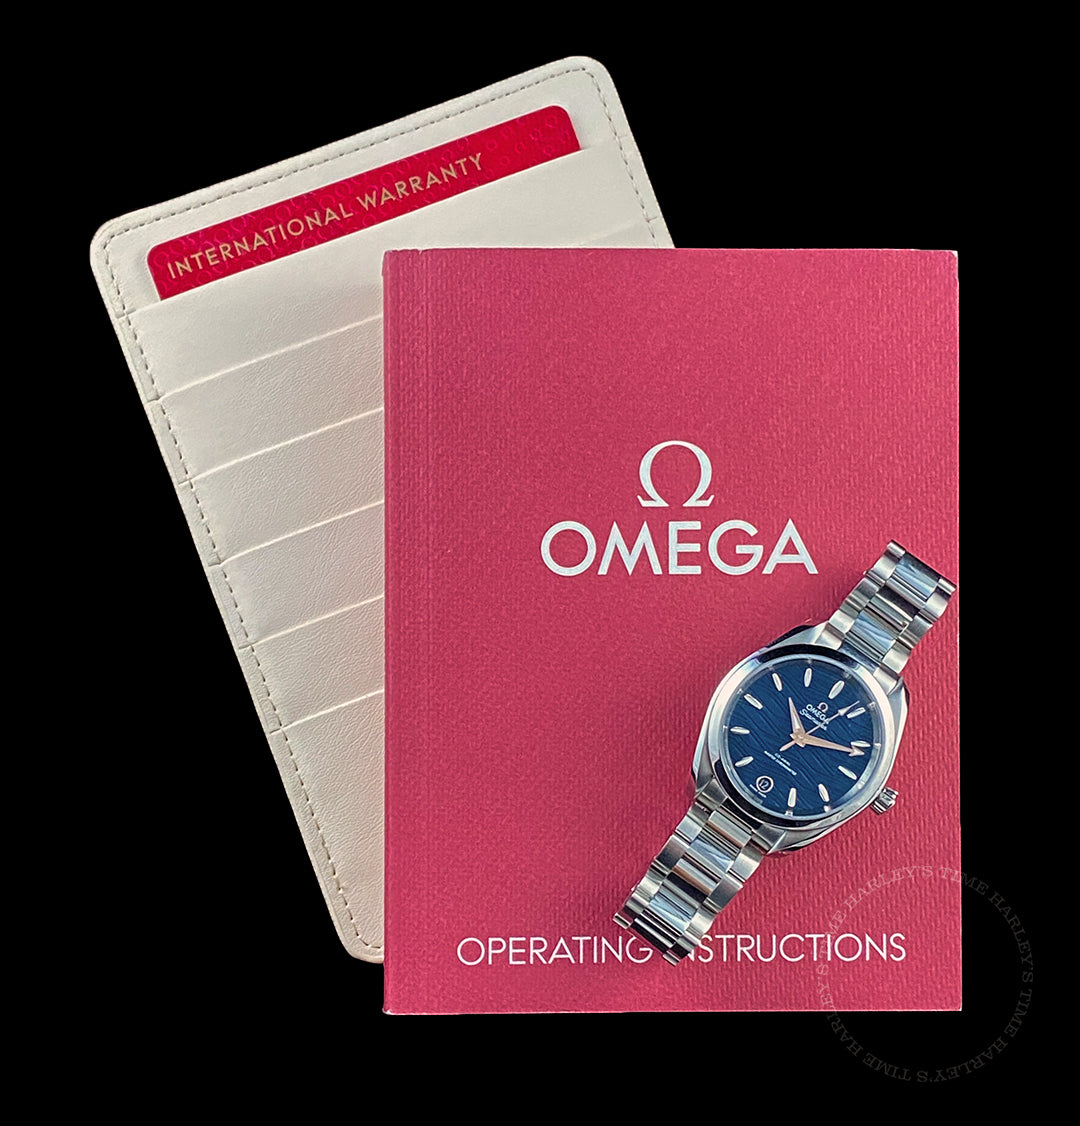 Omega Aqua Terra Seamaster Blue Dial Steel bracelet | Harley's Time LLC